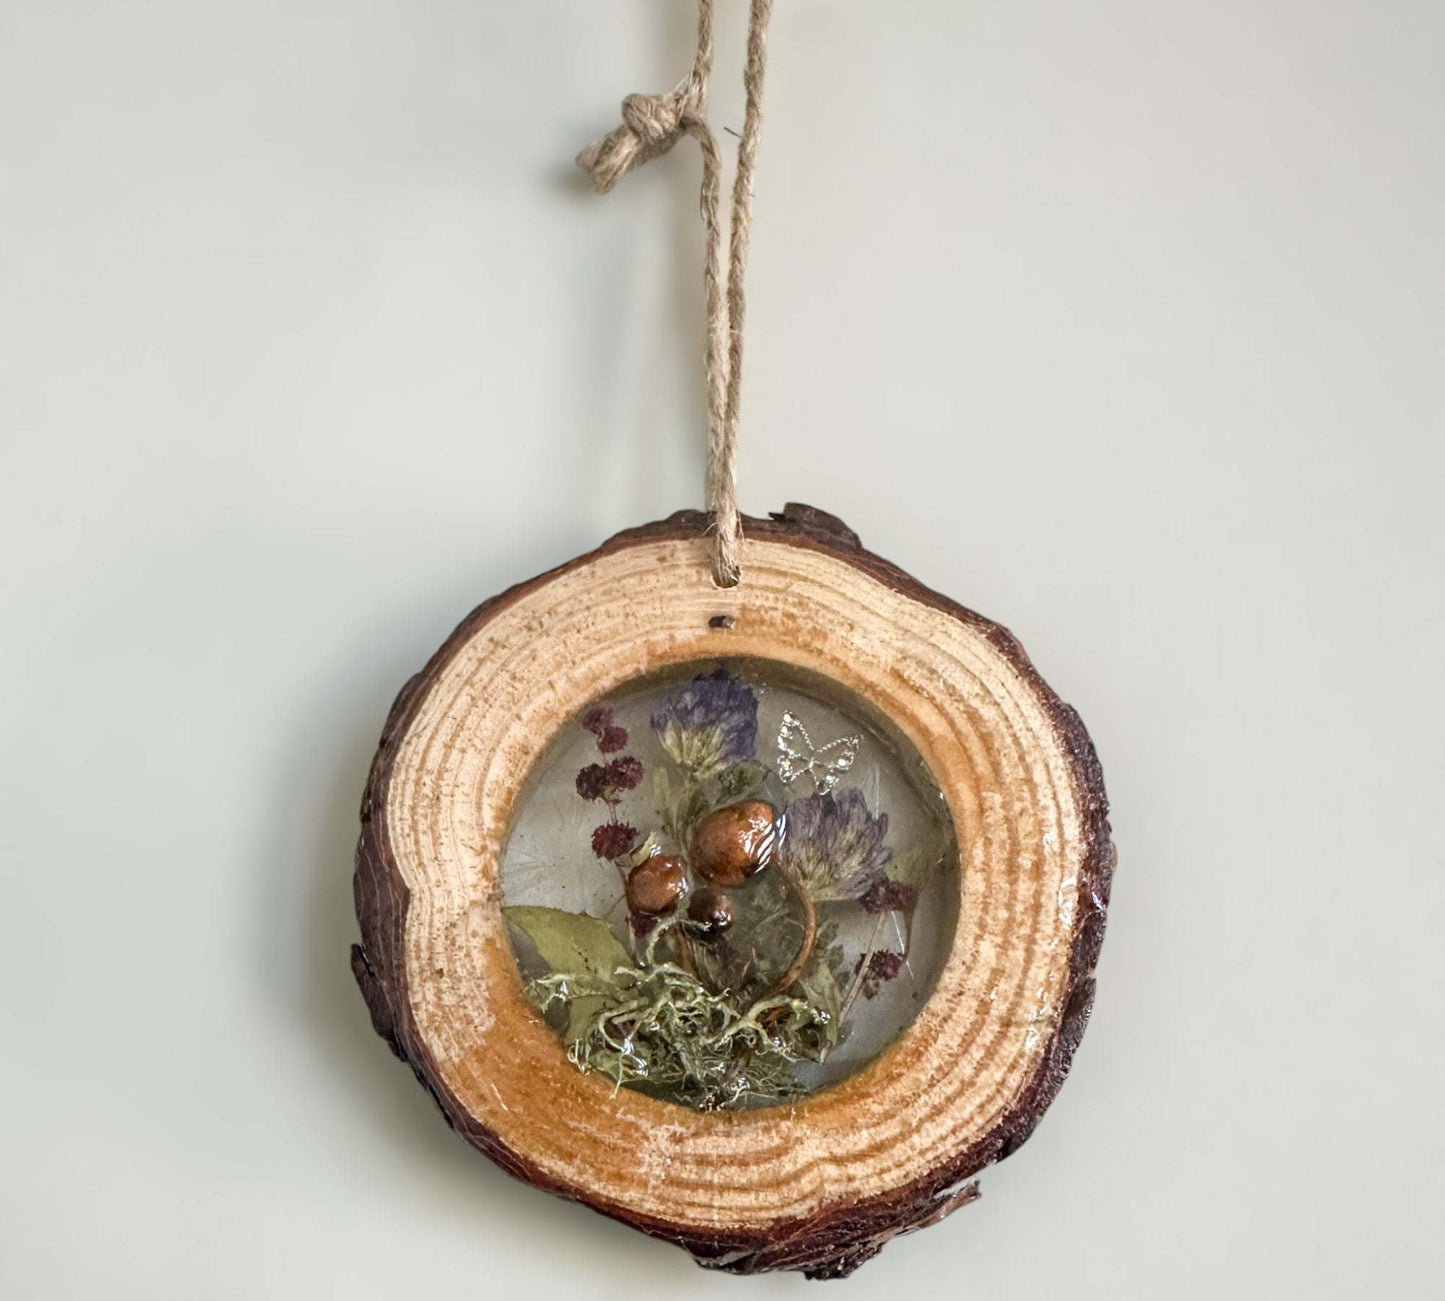 Suncatcher - Mystical Mushroom Grove Suncatcher with Preserved Flowers